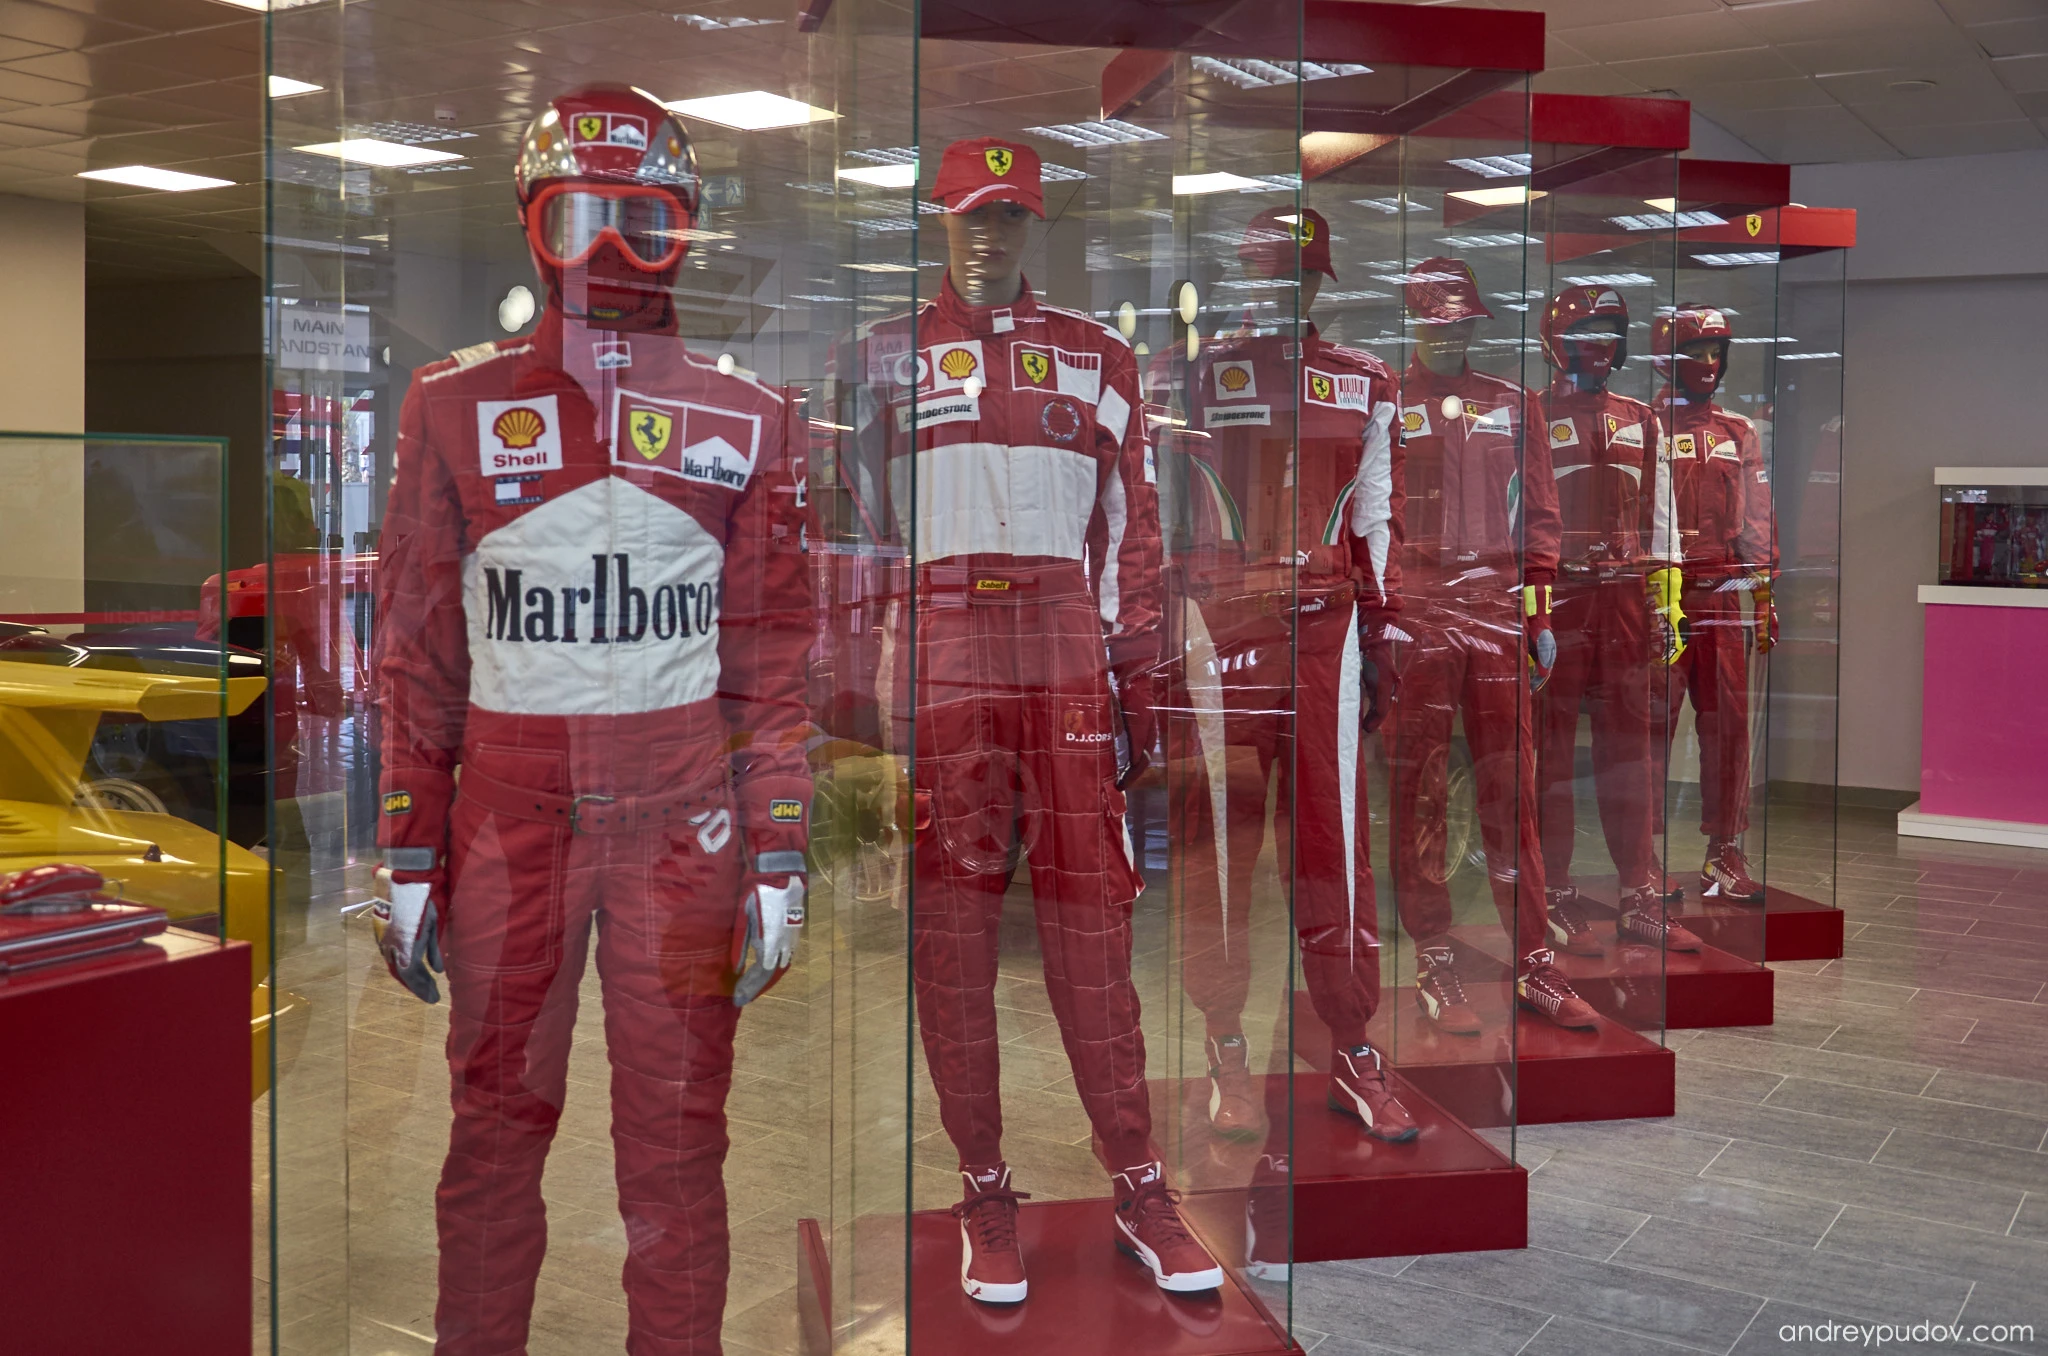 2015 Formula 1 Russian Grand Prix - Scuderia Ferrari racing suits at Autosport Museum in the main tribune of Sochi Autodrom.